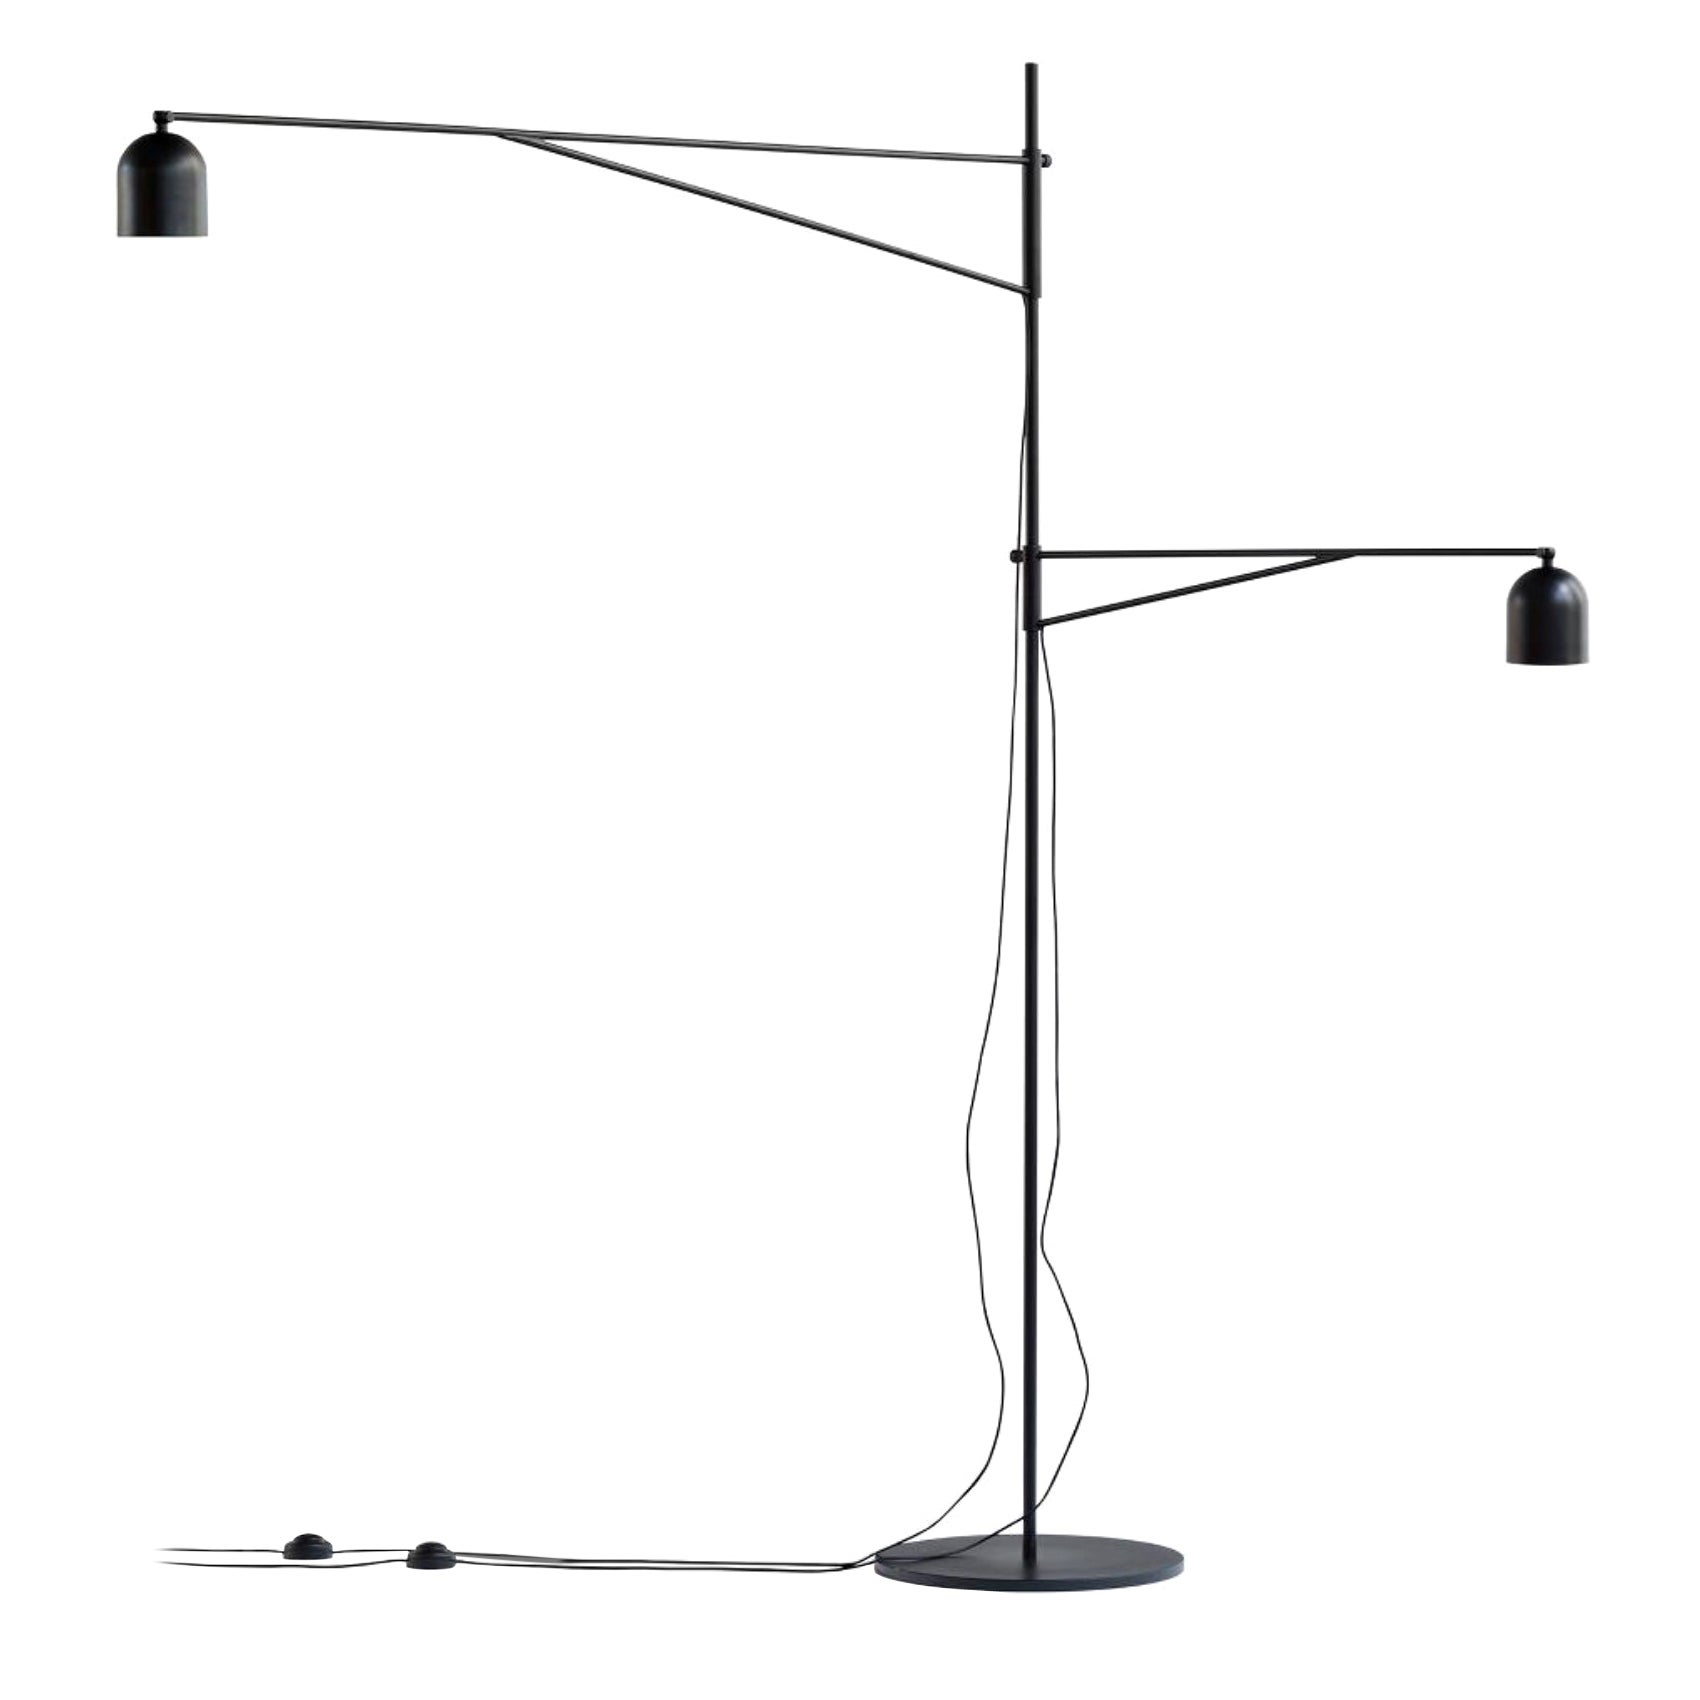 Anatomy Design 'Awkward Light' Steel and Aluminium Floor Lamp by Karakter For Sale